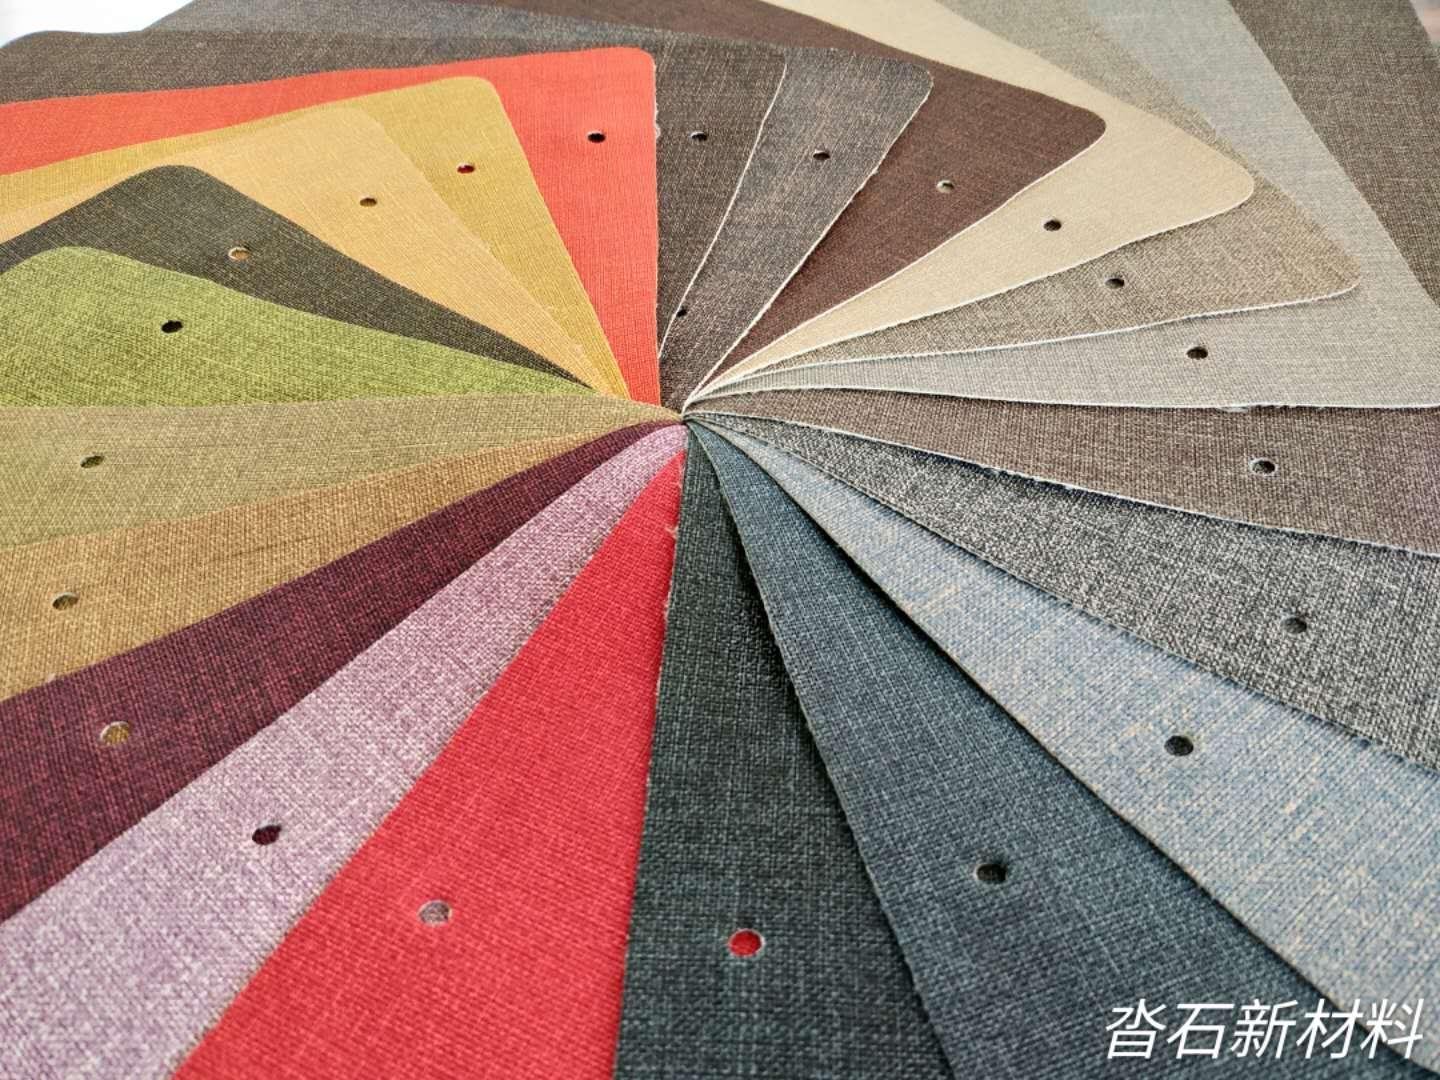 Imitation cloth grain artificial leather 5